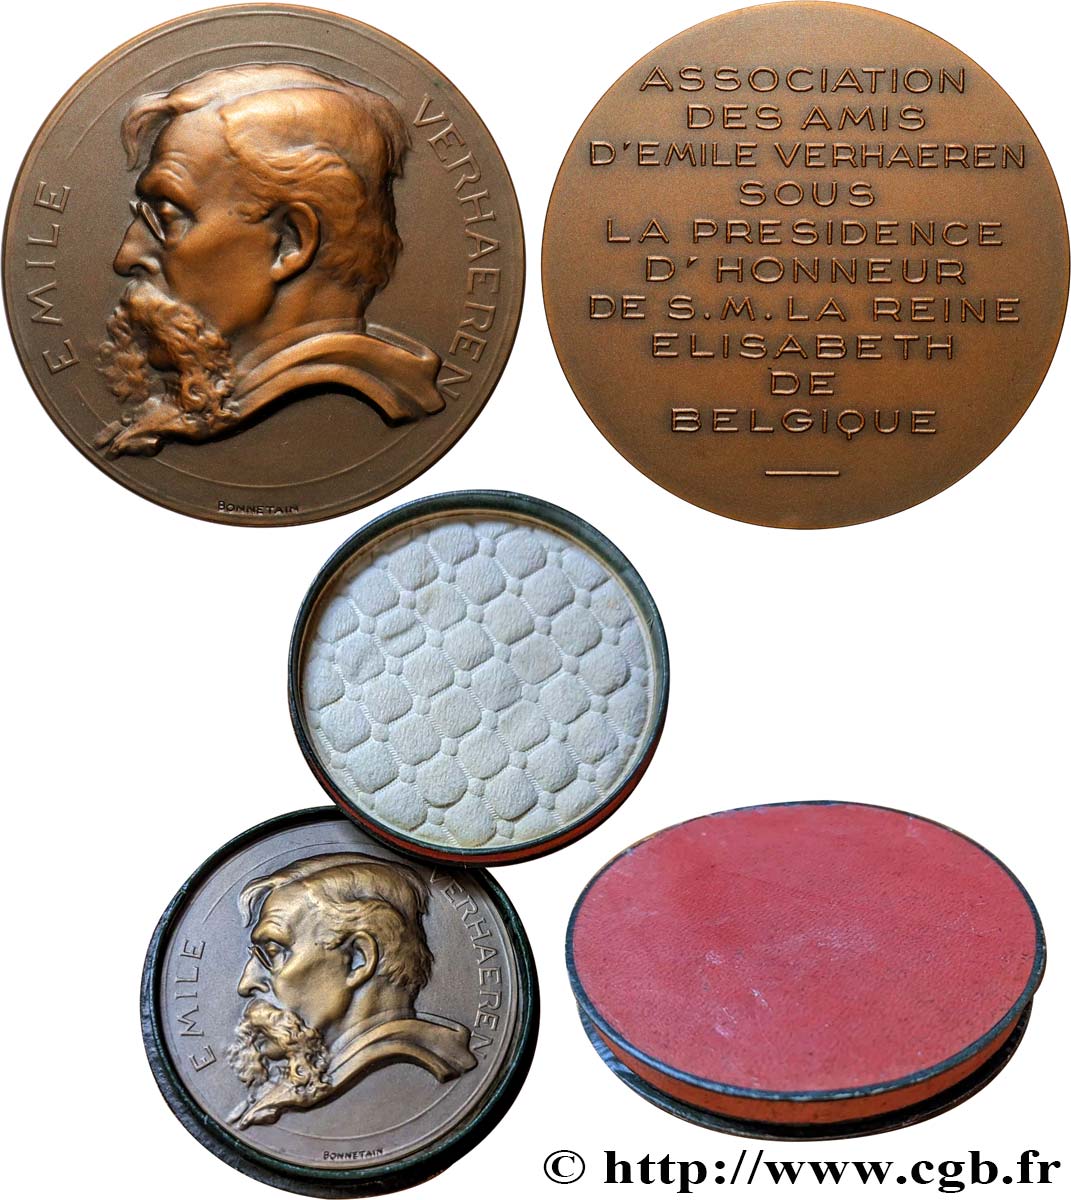 BELGIO - REINO DE BELGIO - ALBERTO I Médaille, Association des amis d’Emile Verhaeren SPL